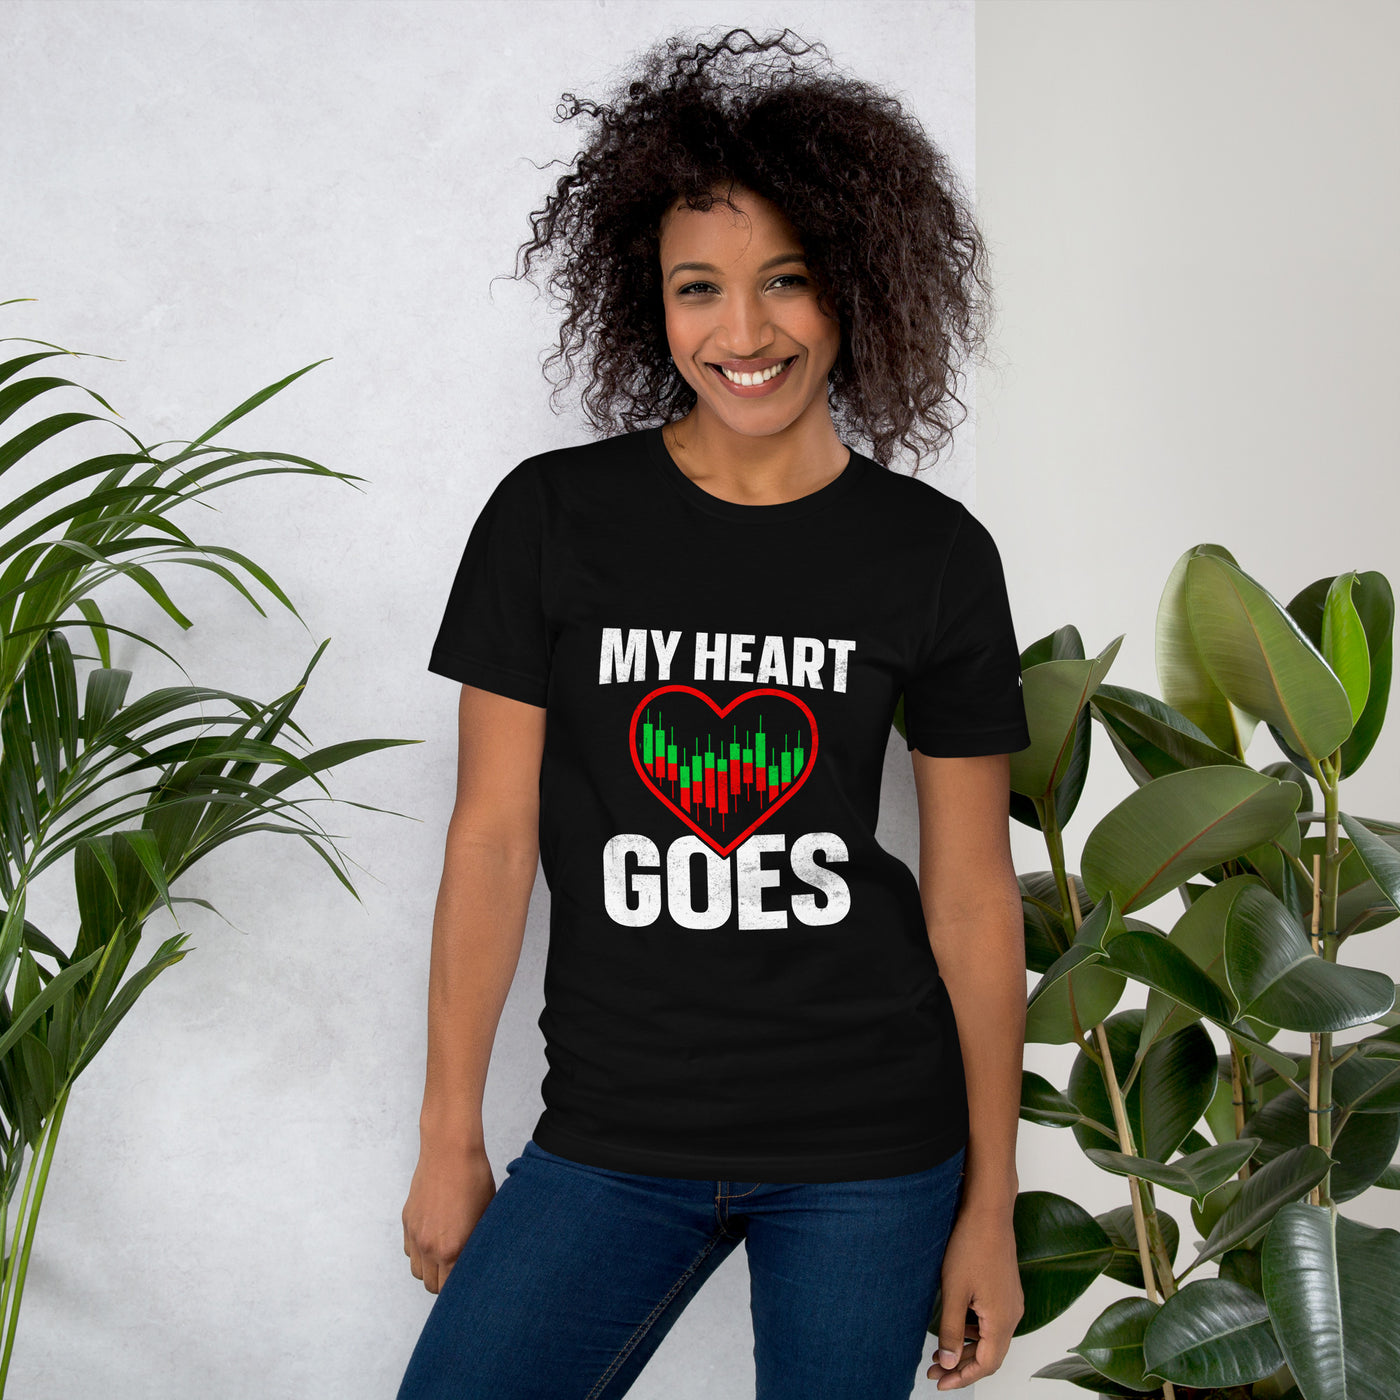 My Heart Goes - Unisex t-shirt